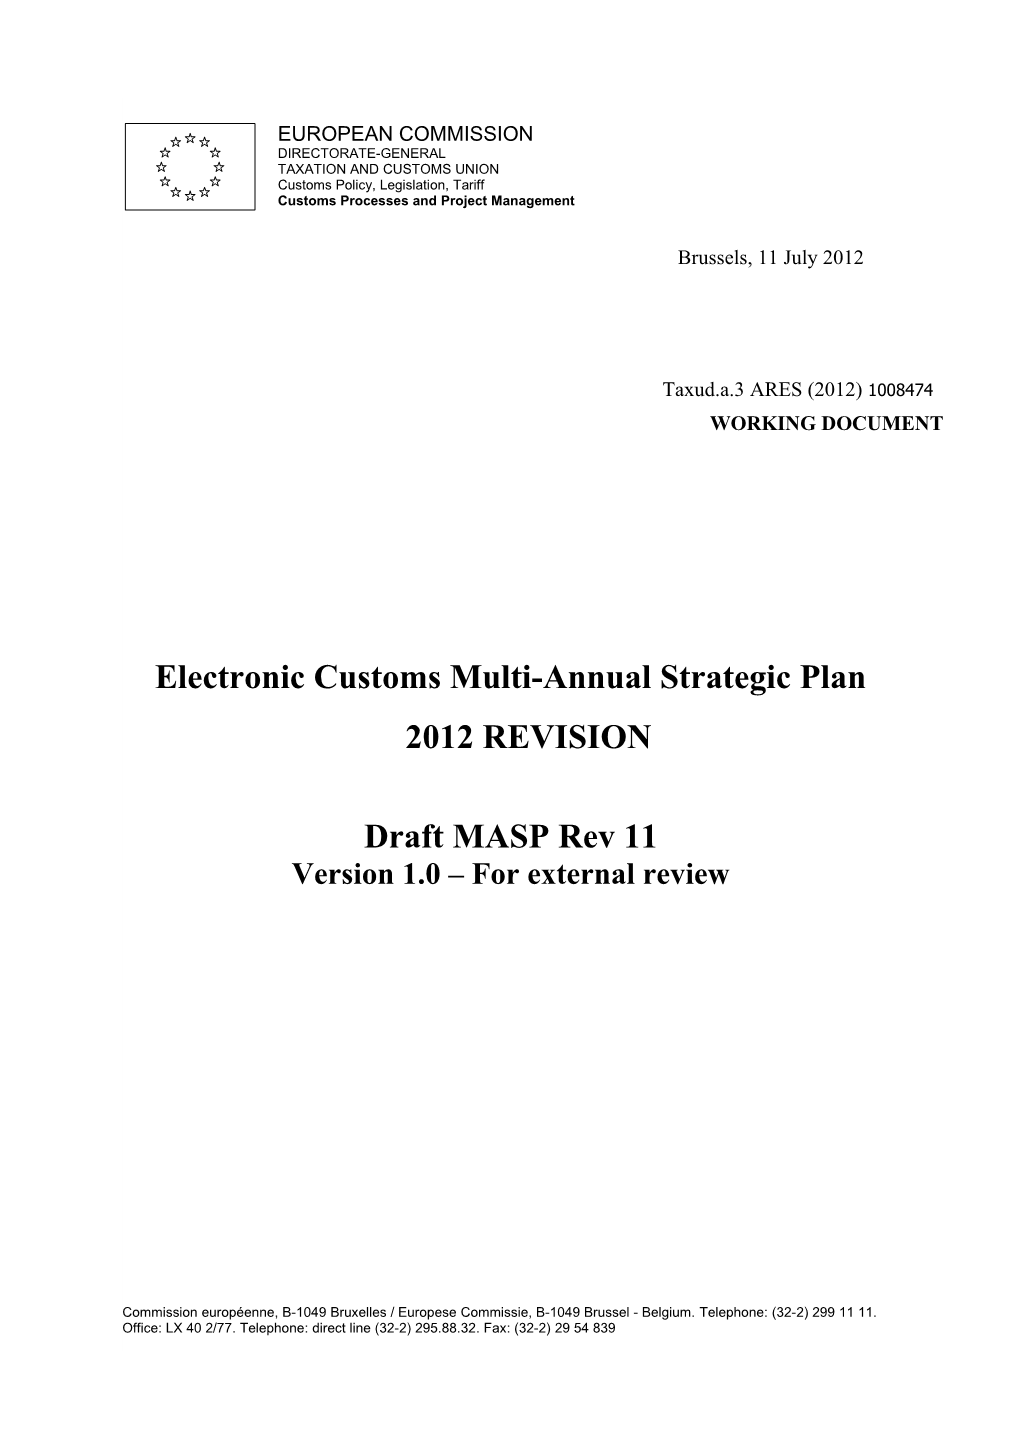 Electronic Customs Multi-Annual Strategic Plan